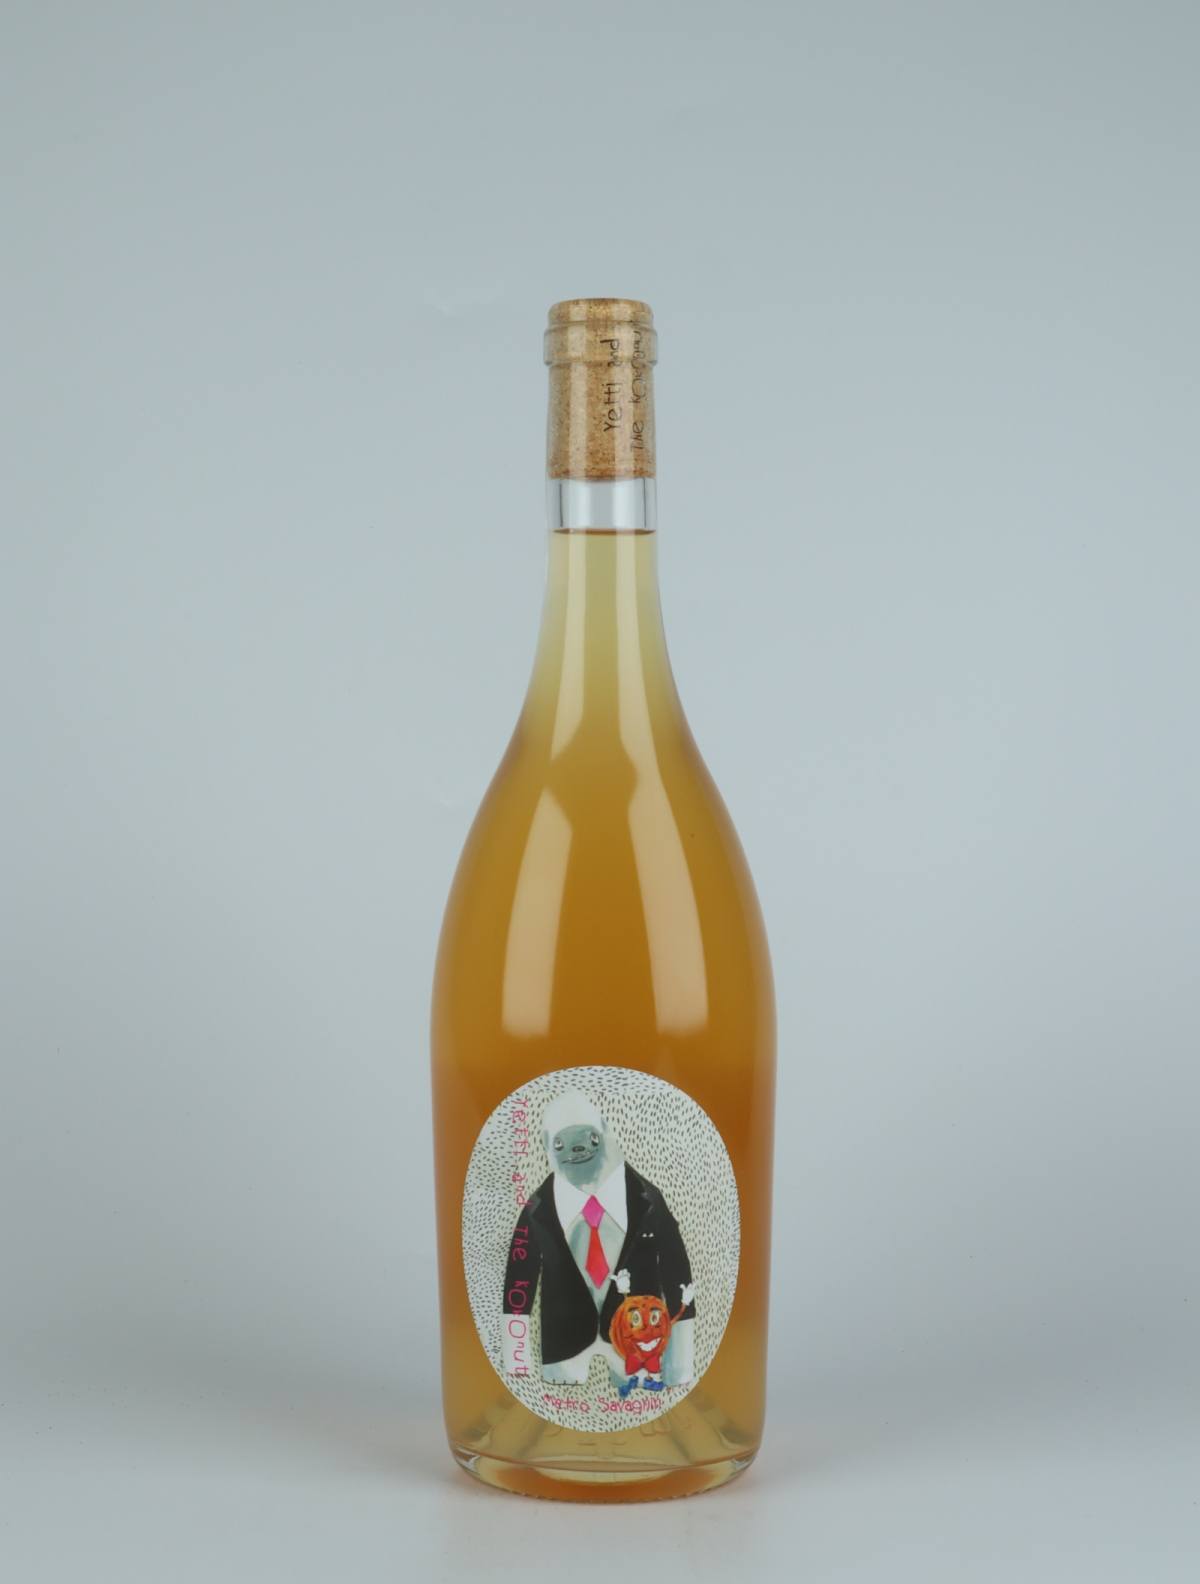 A bottle 2021 Metro Savagnin Orange wine from Yetti and the Kokonut, Adelaide Hills in Australia